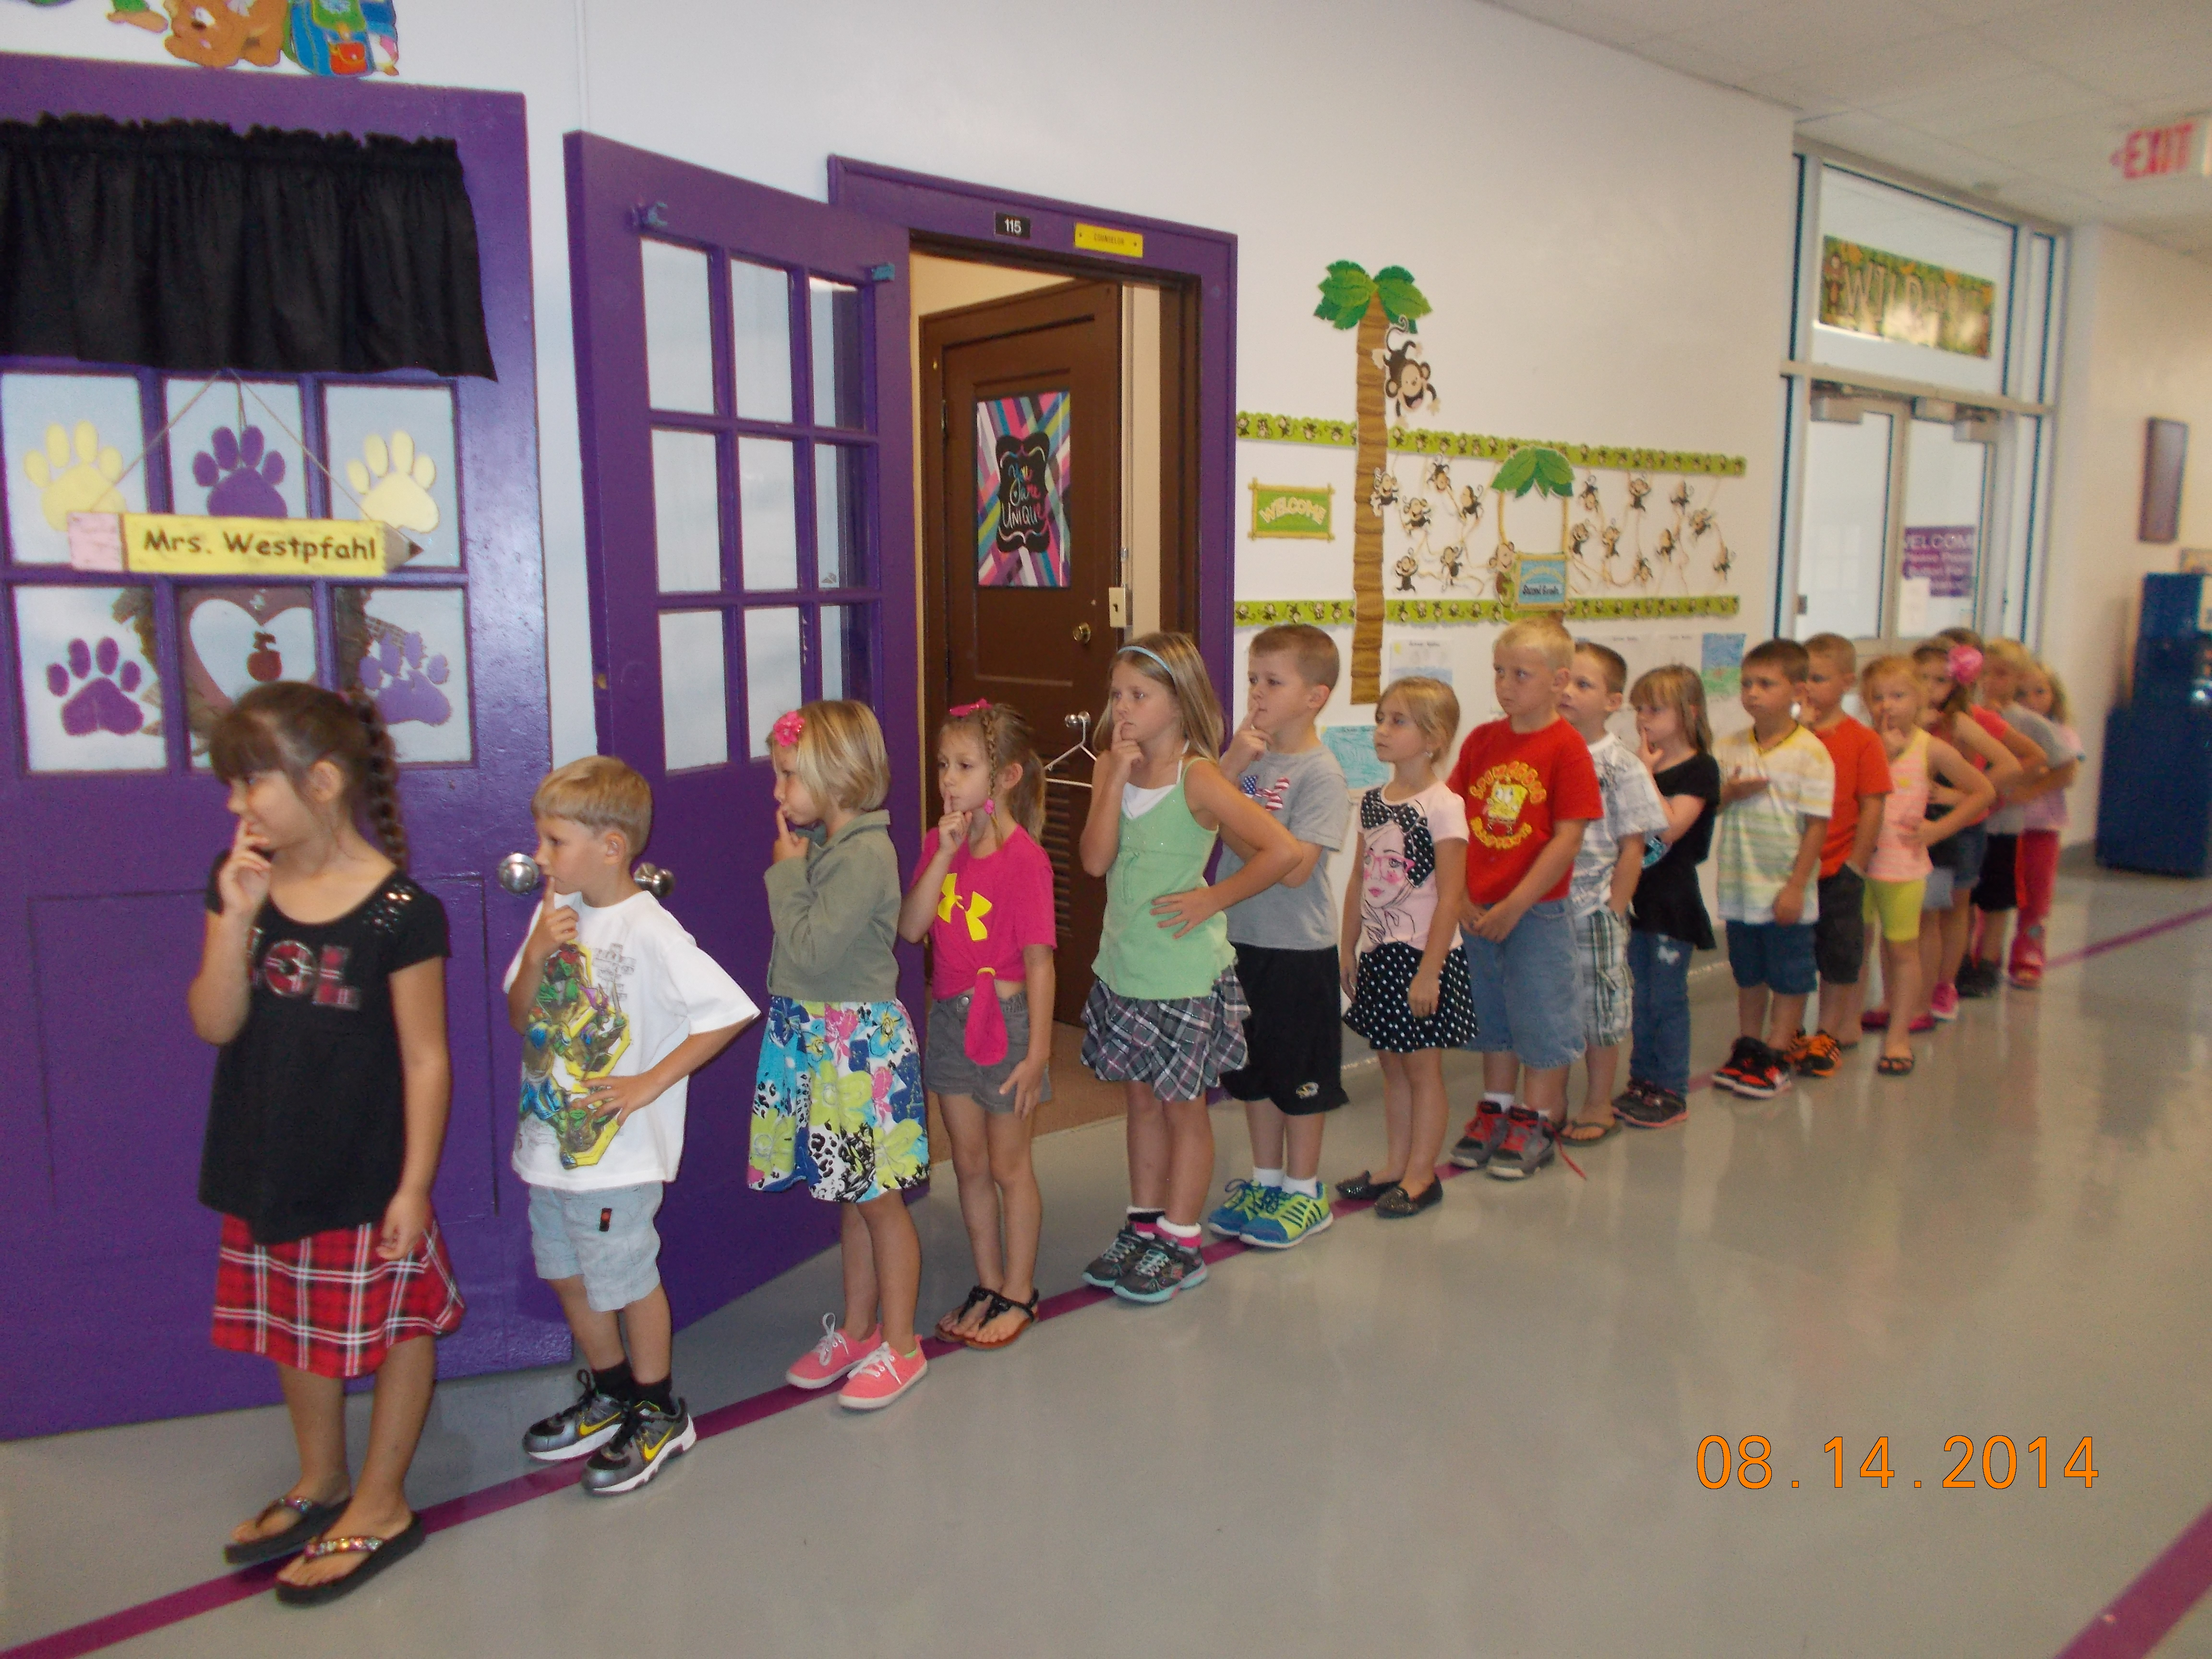 Mrs. Westpfahl's 1st graders show their Tiger Pride when they model good hallway behavior.